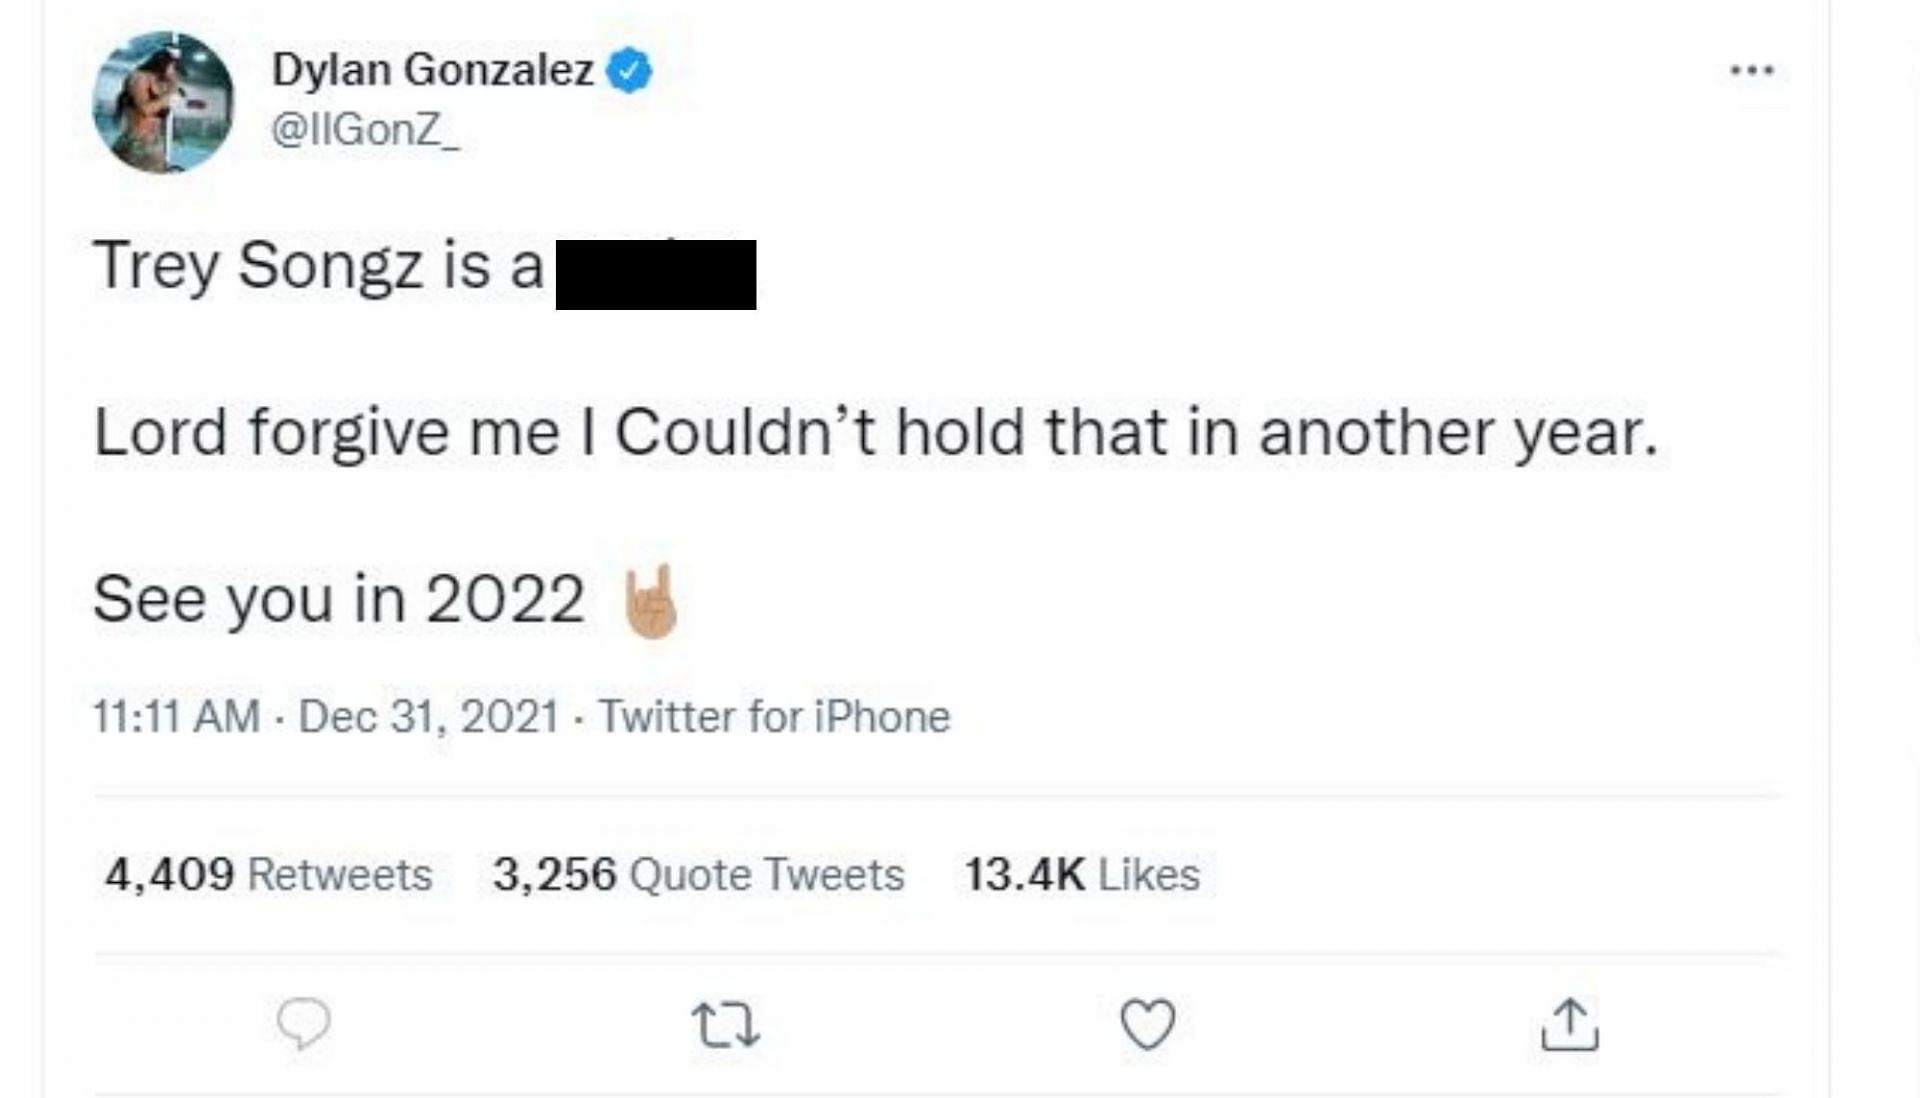 Dylan Gonzalez accused Trey Songz on Twitter (Image via Twitter)